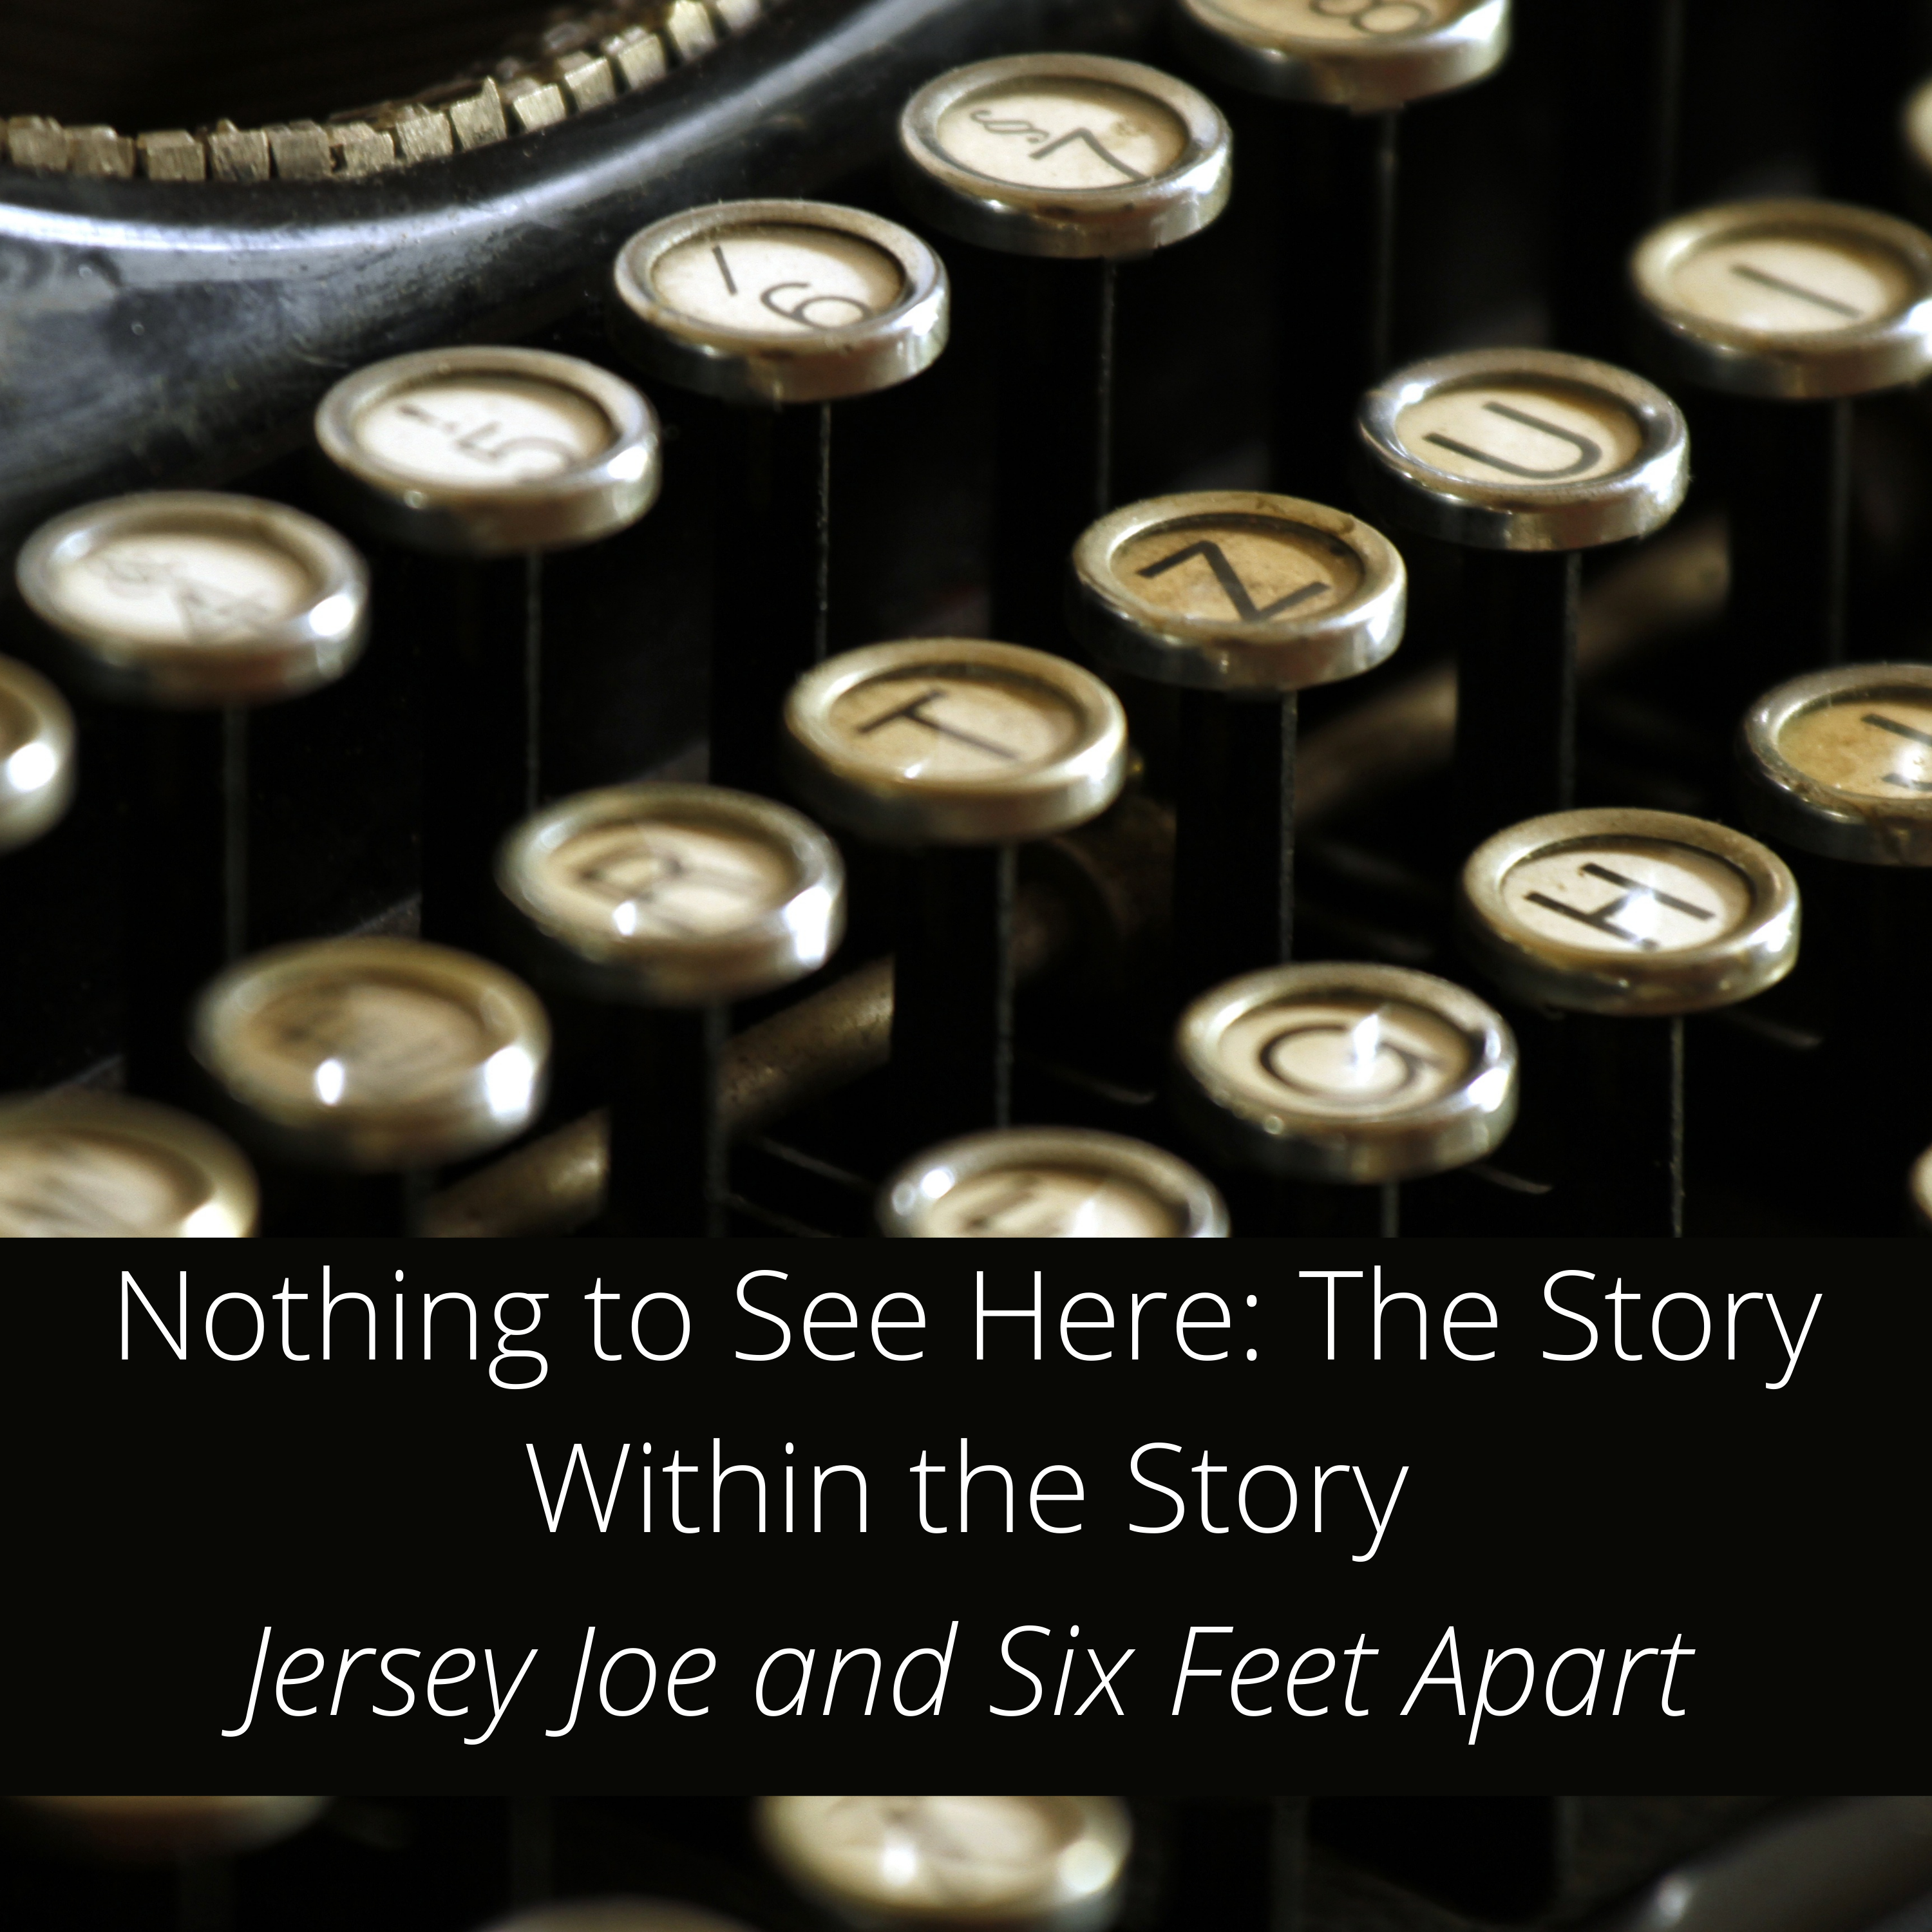 Jersey Joe and Six Feet Apart